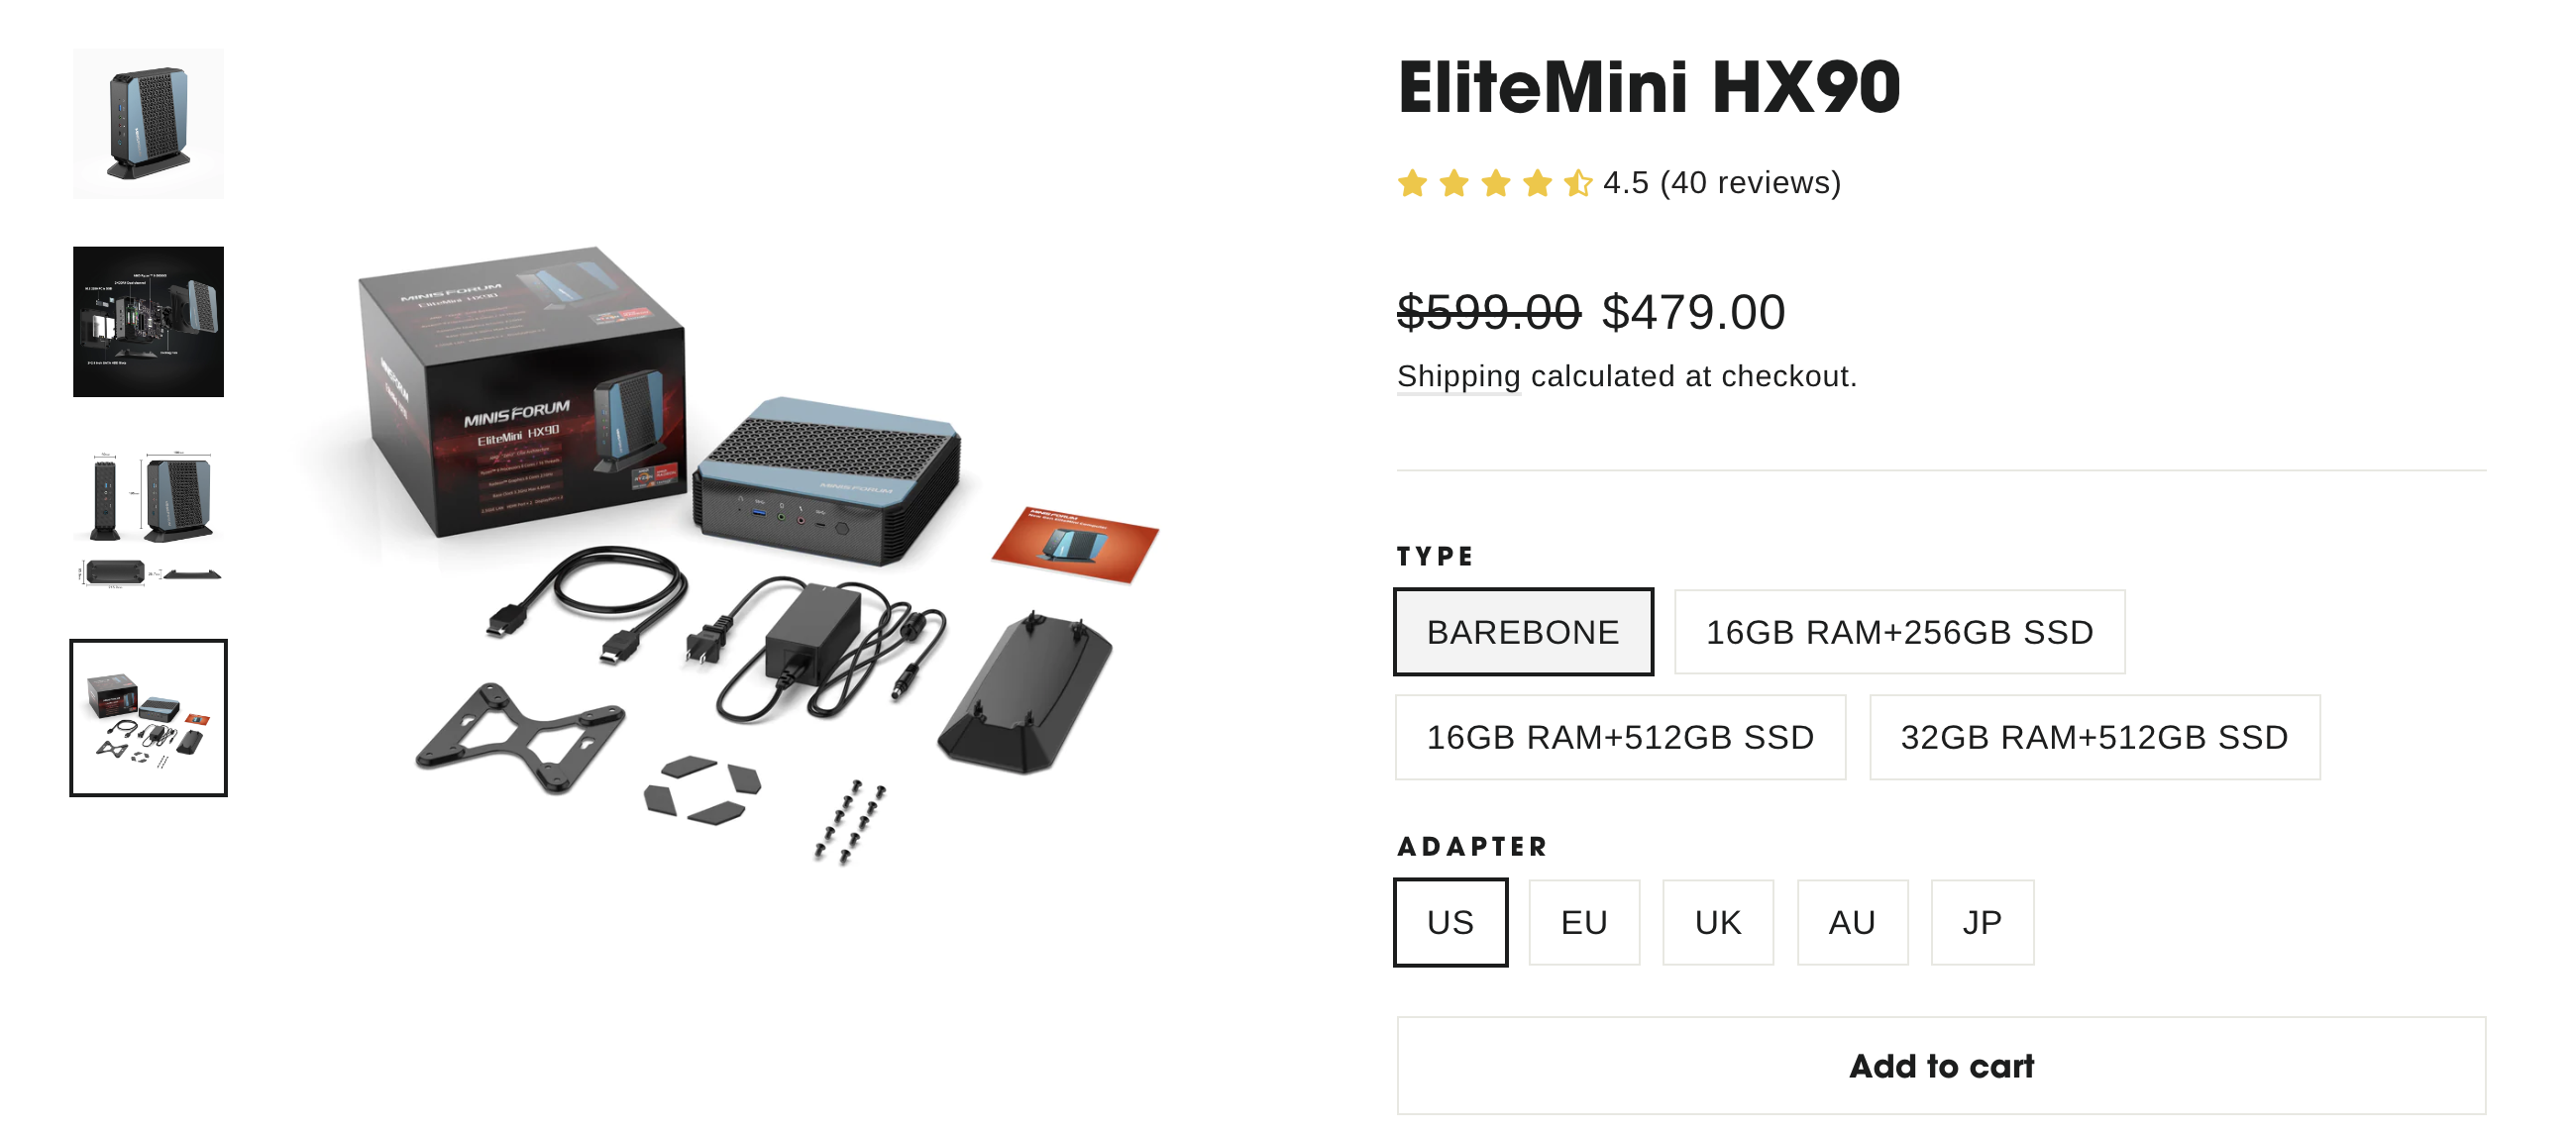 Minisforum EliteMini HX90 Mini PC: Ryzen 95900HX, 2xDDR4 SODIMM, 2x 2.5" SATA Bay, 1x M.2 2280, Wi-Fi 6 + BT 5.0 @ 479.00 and More $479